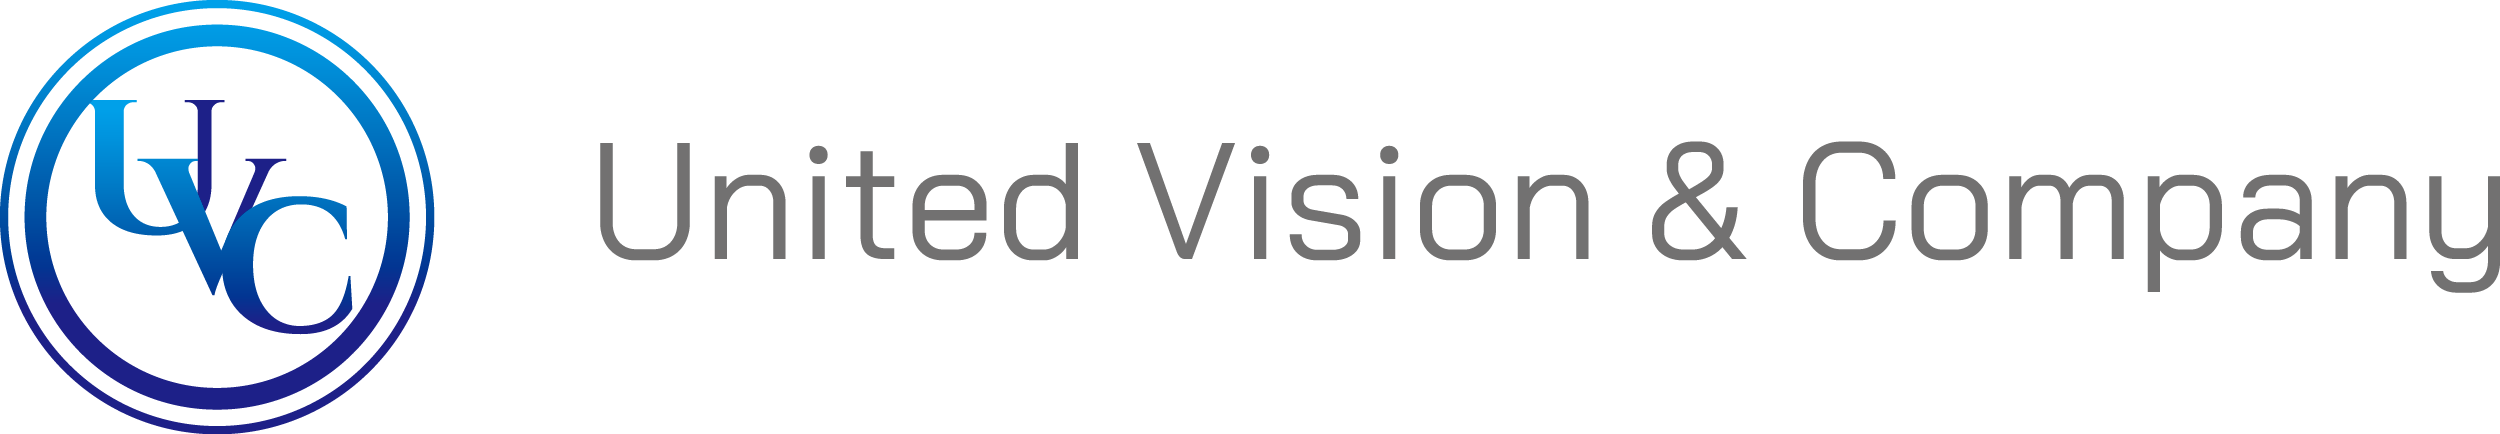 United Vision & Company